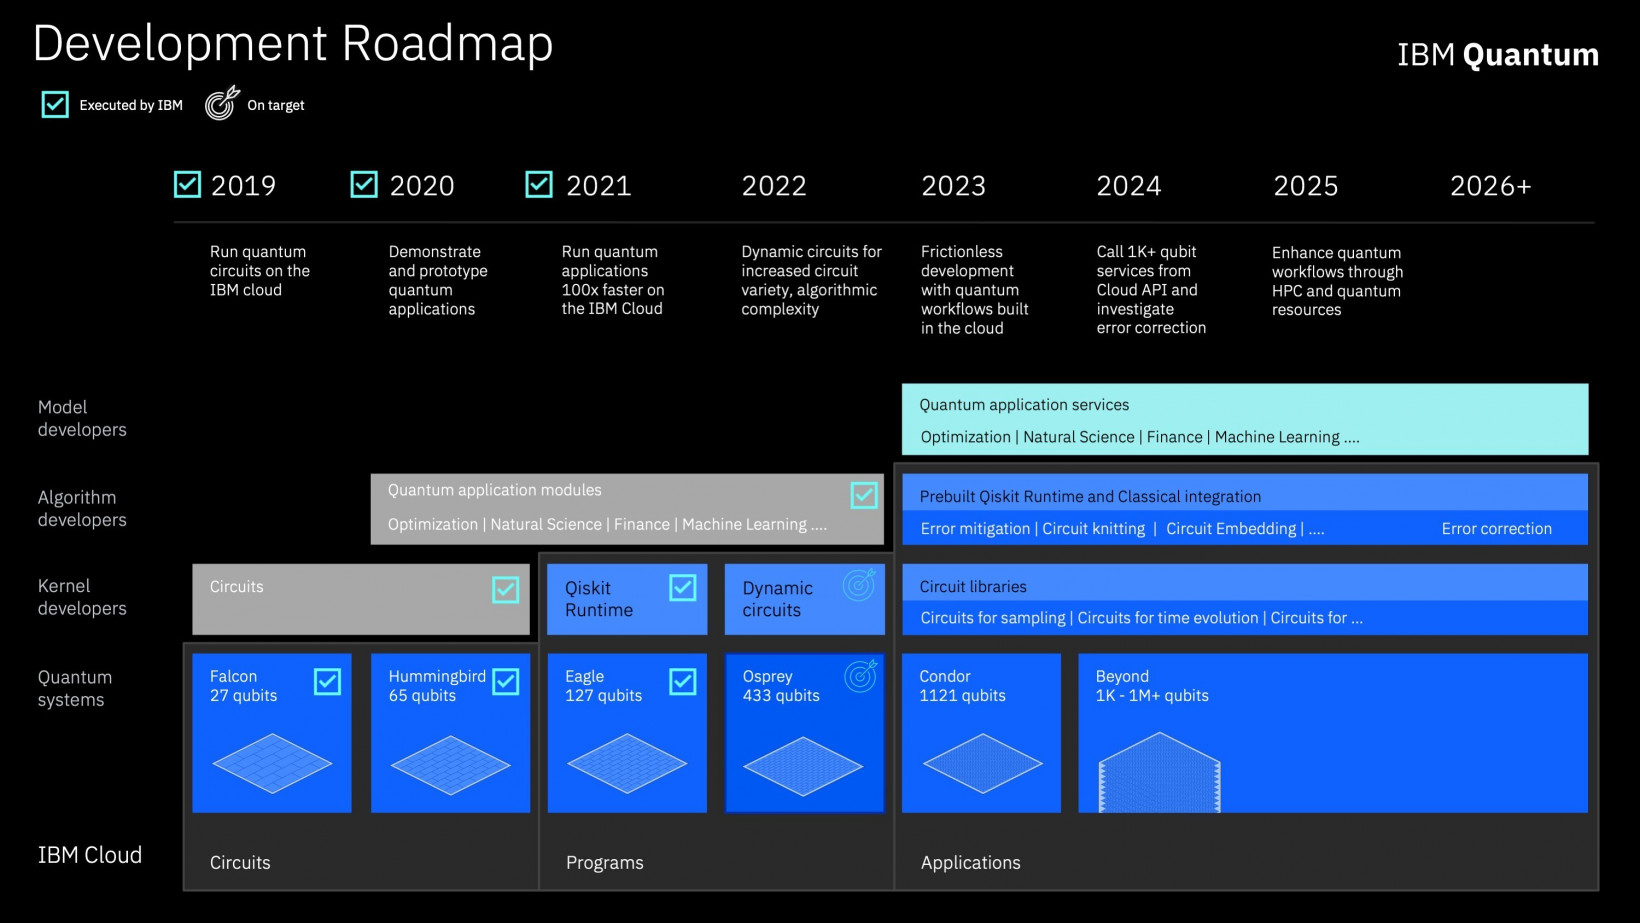 IBM's quantum roadmap, an infographic